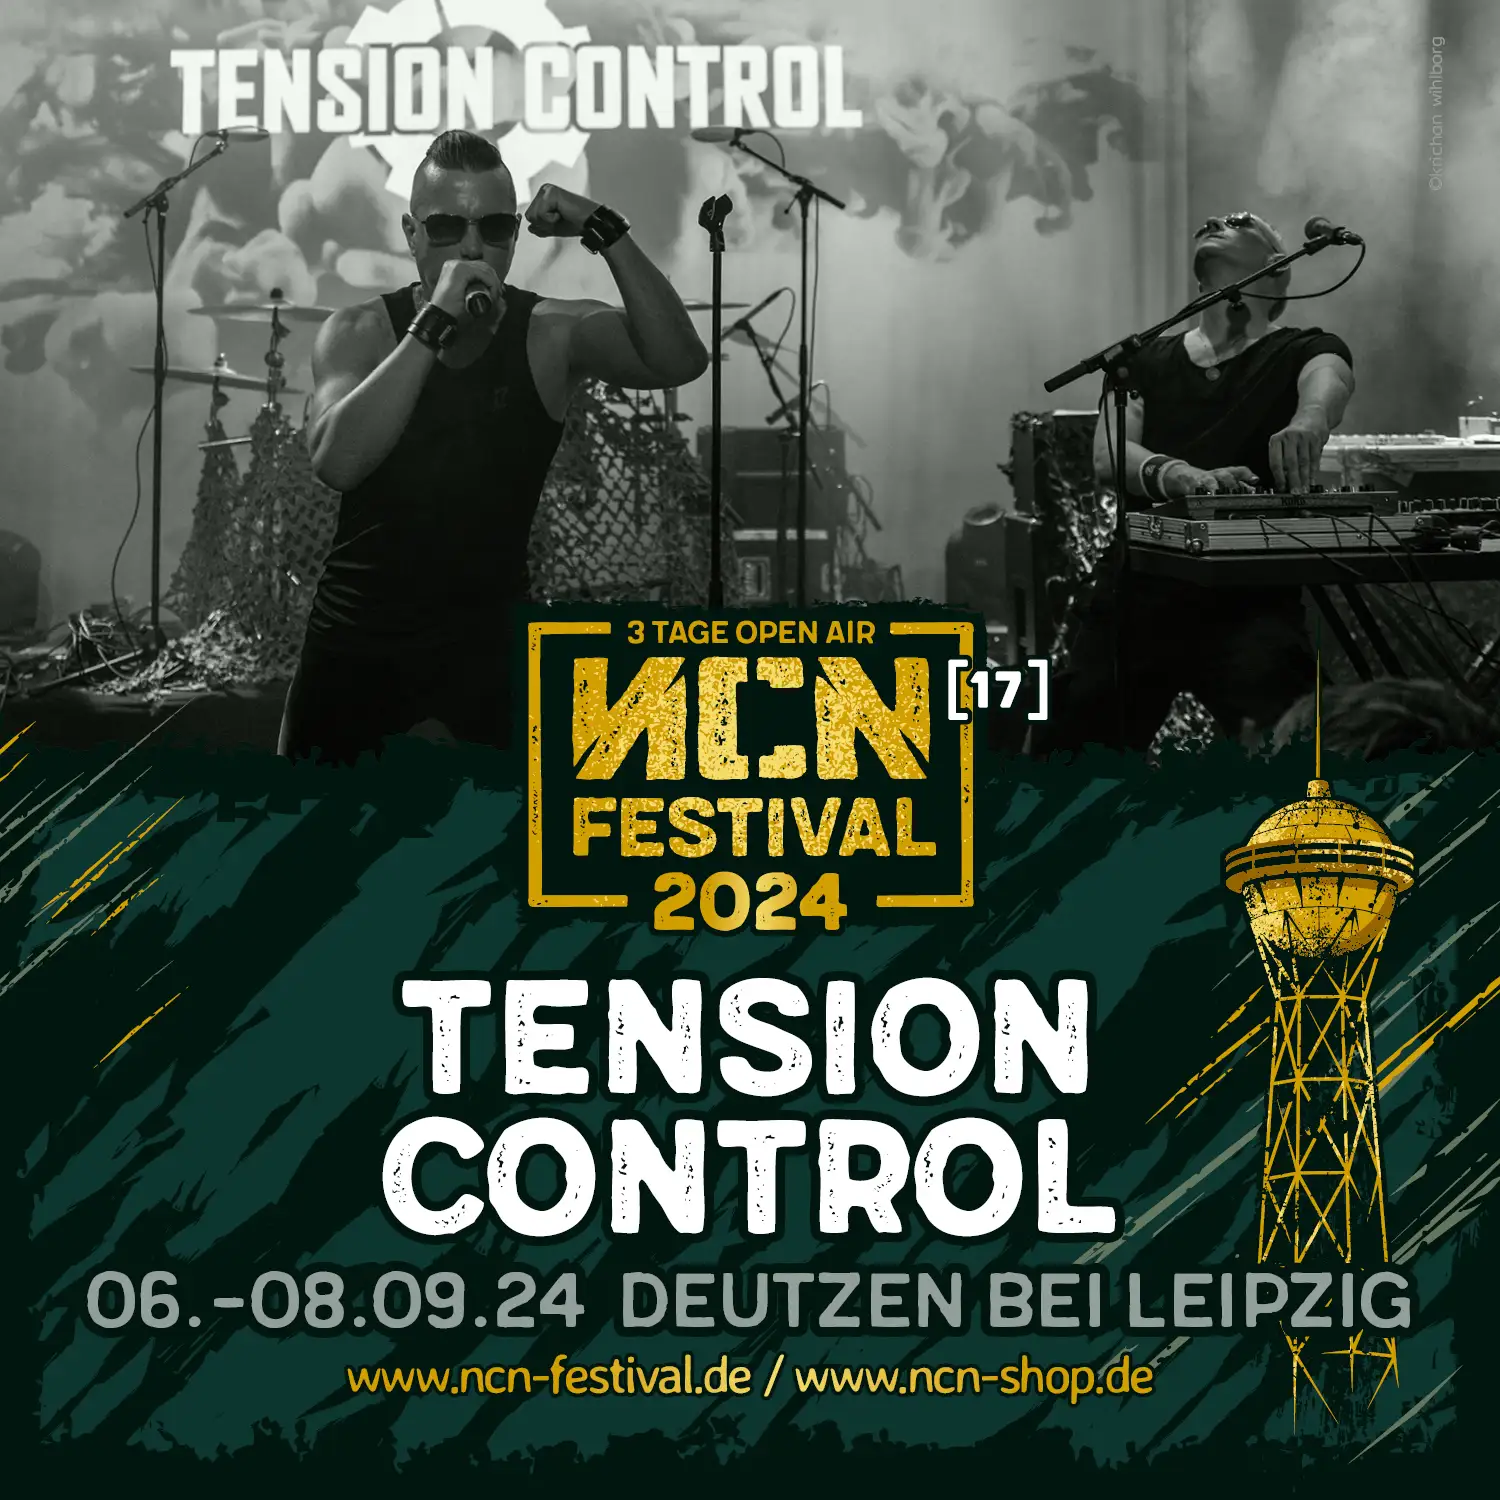 Tension Control